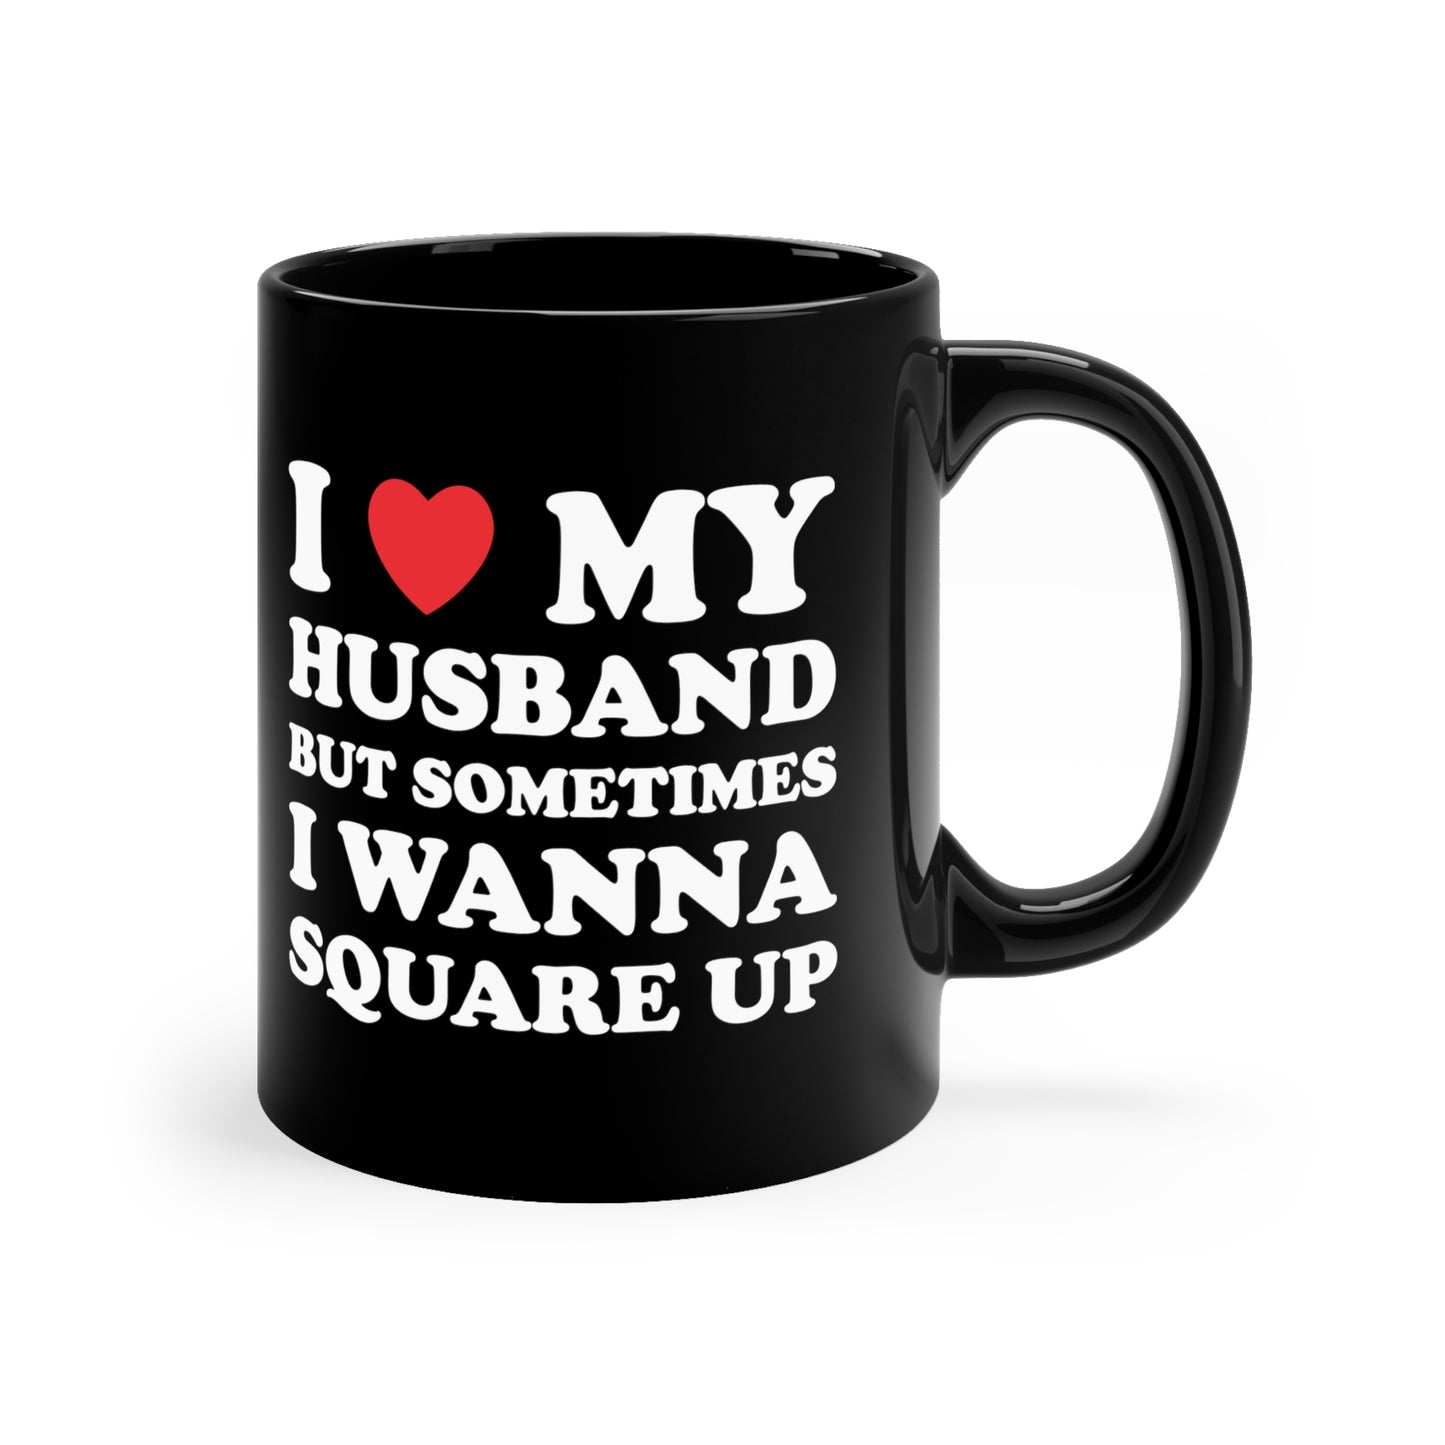 I Love My Hot Husband But Sometimes I Wanna Square Up 11oz Black Mug